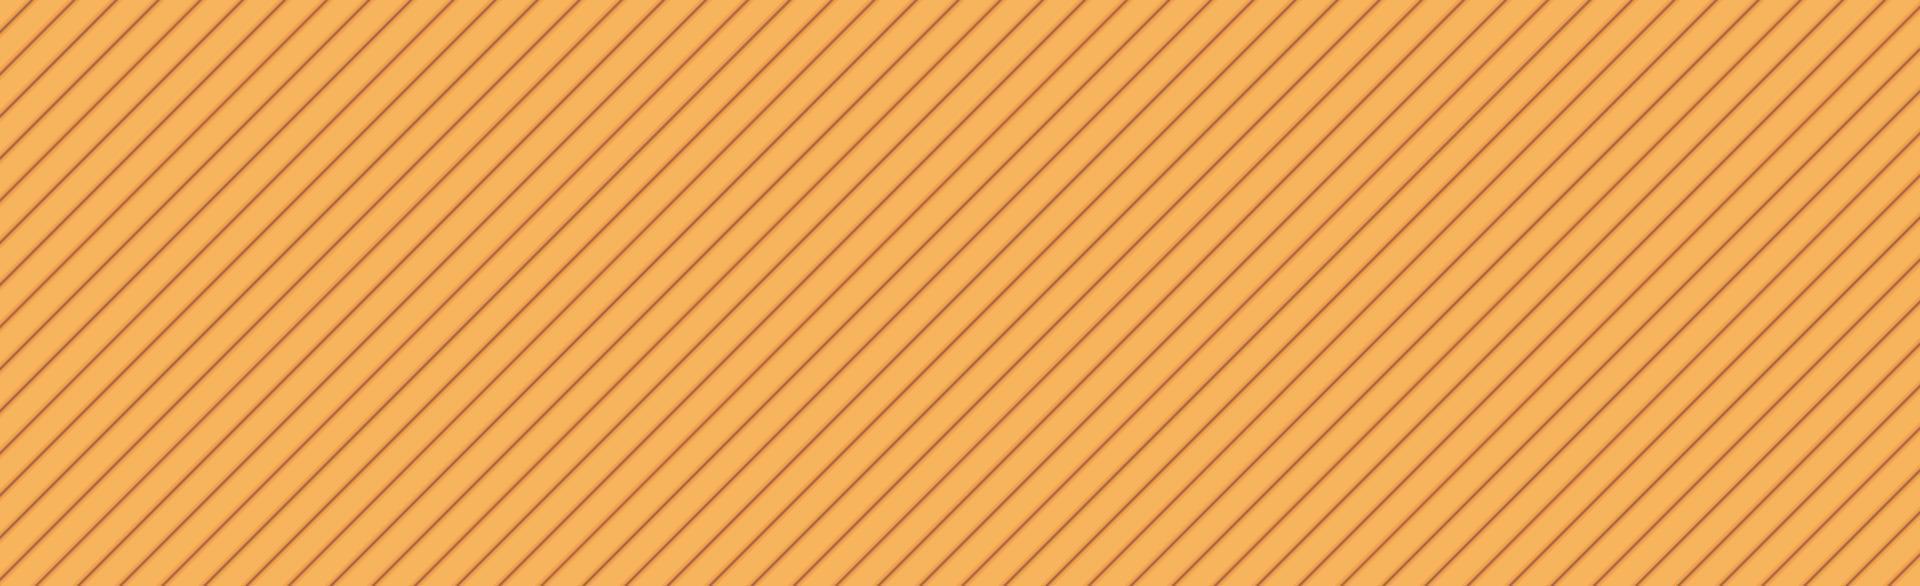 Resumen panorámico amarillo-naranja textura fondo líneas inclinadas - vector